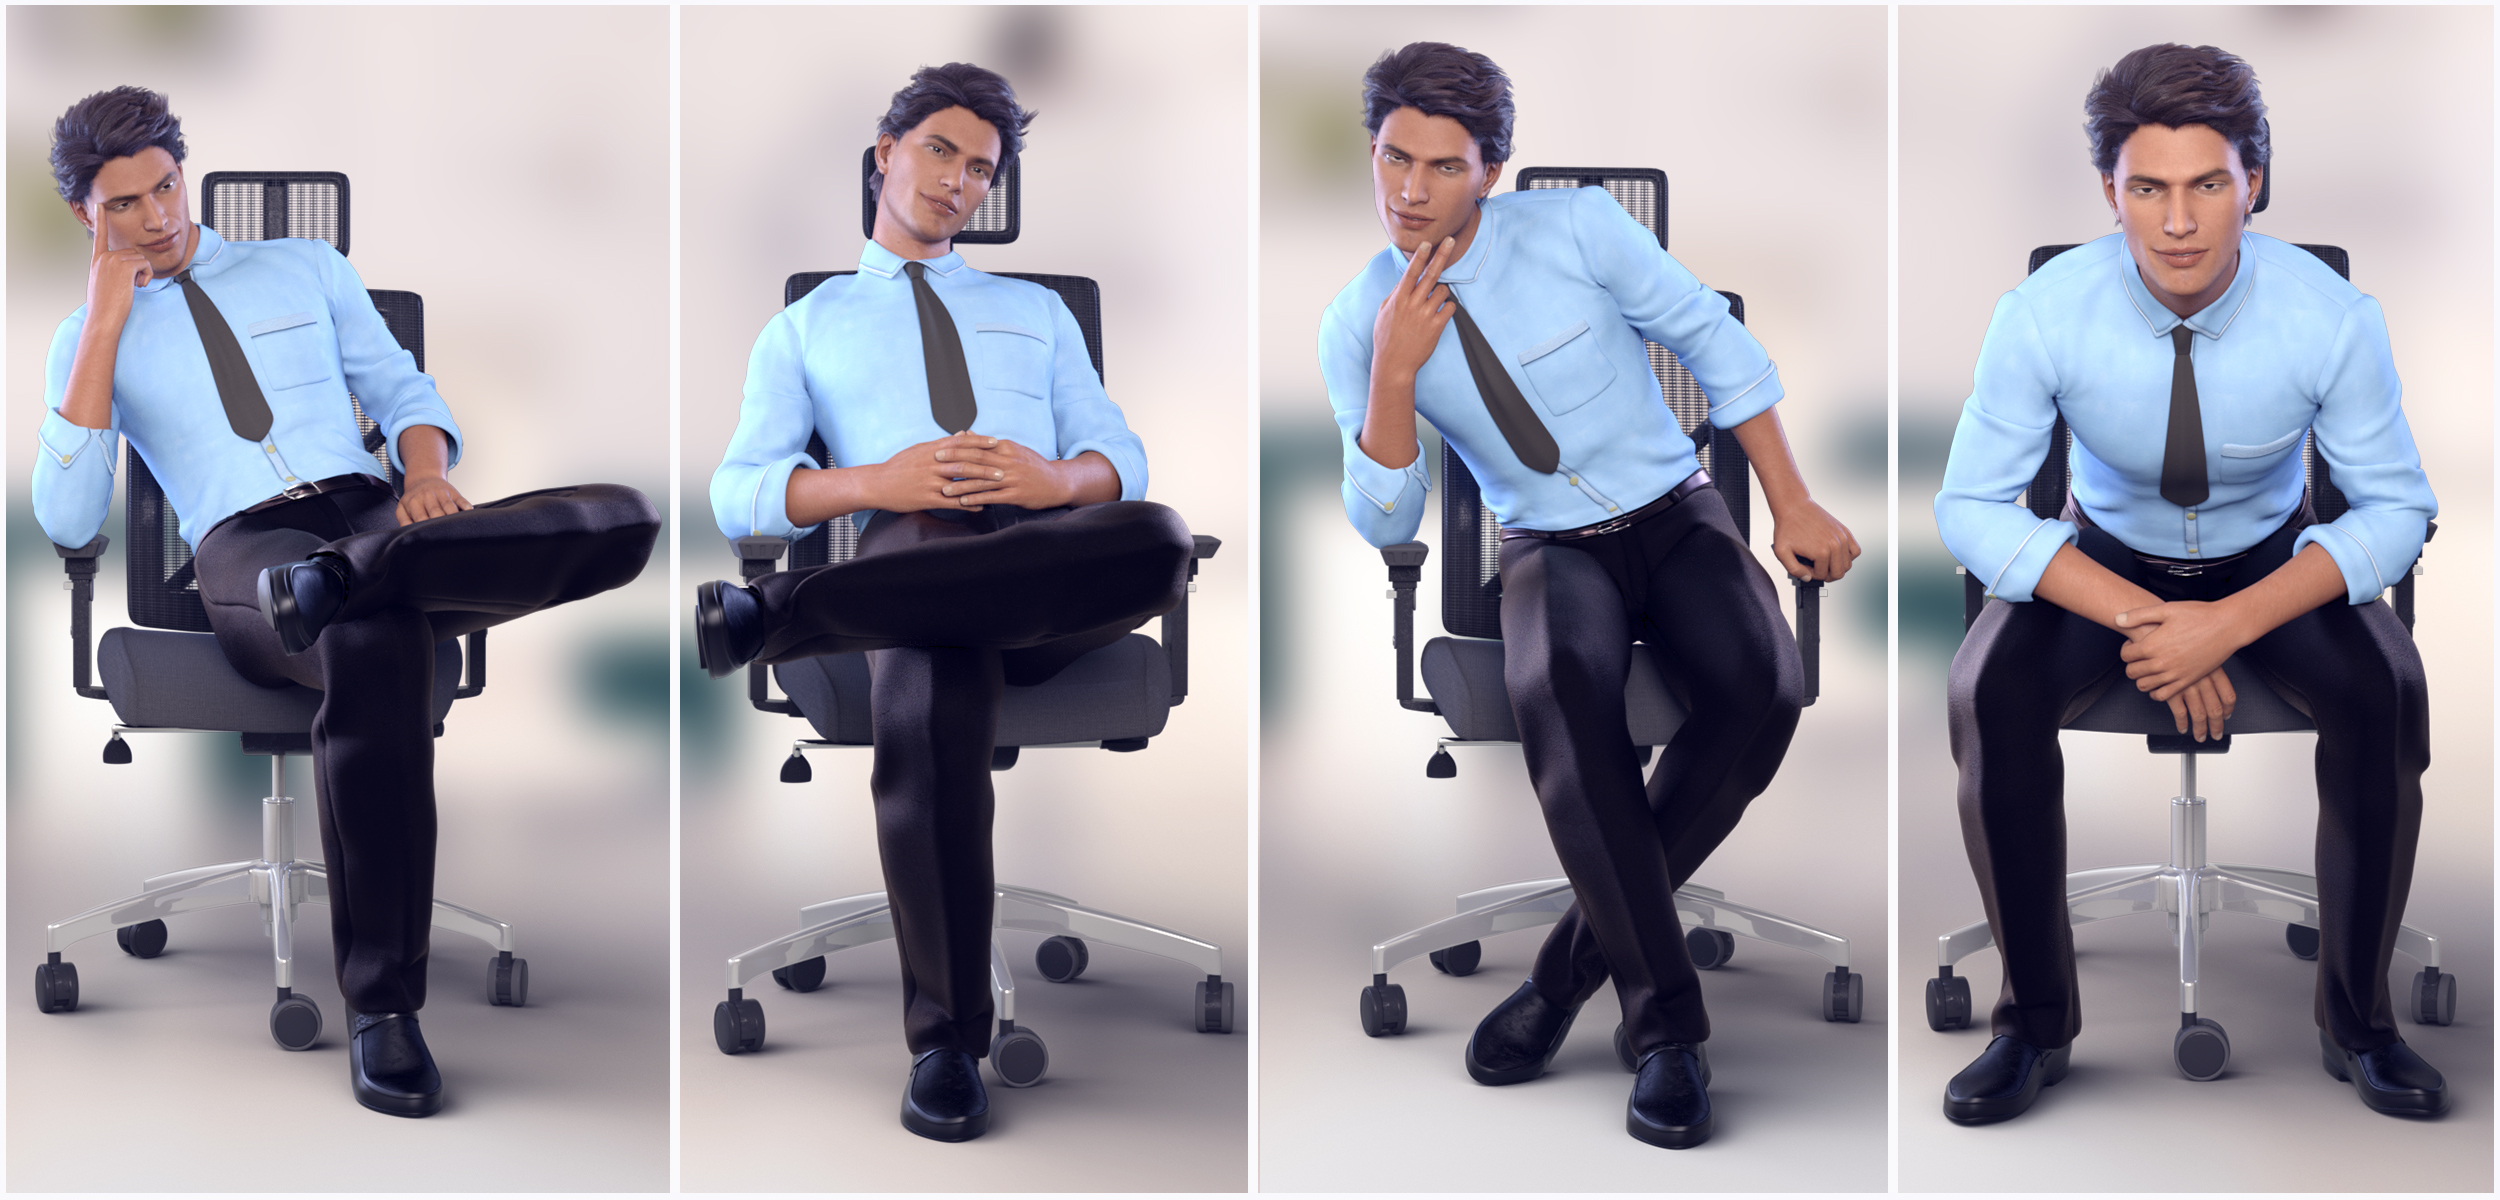 Z Morphing Office Chair & Poses by: Zeddicuss, 3D Models by Daz 3D